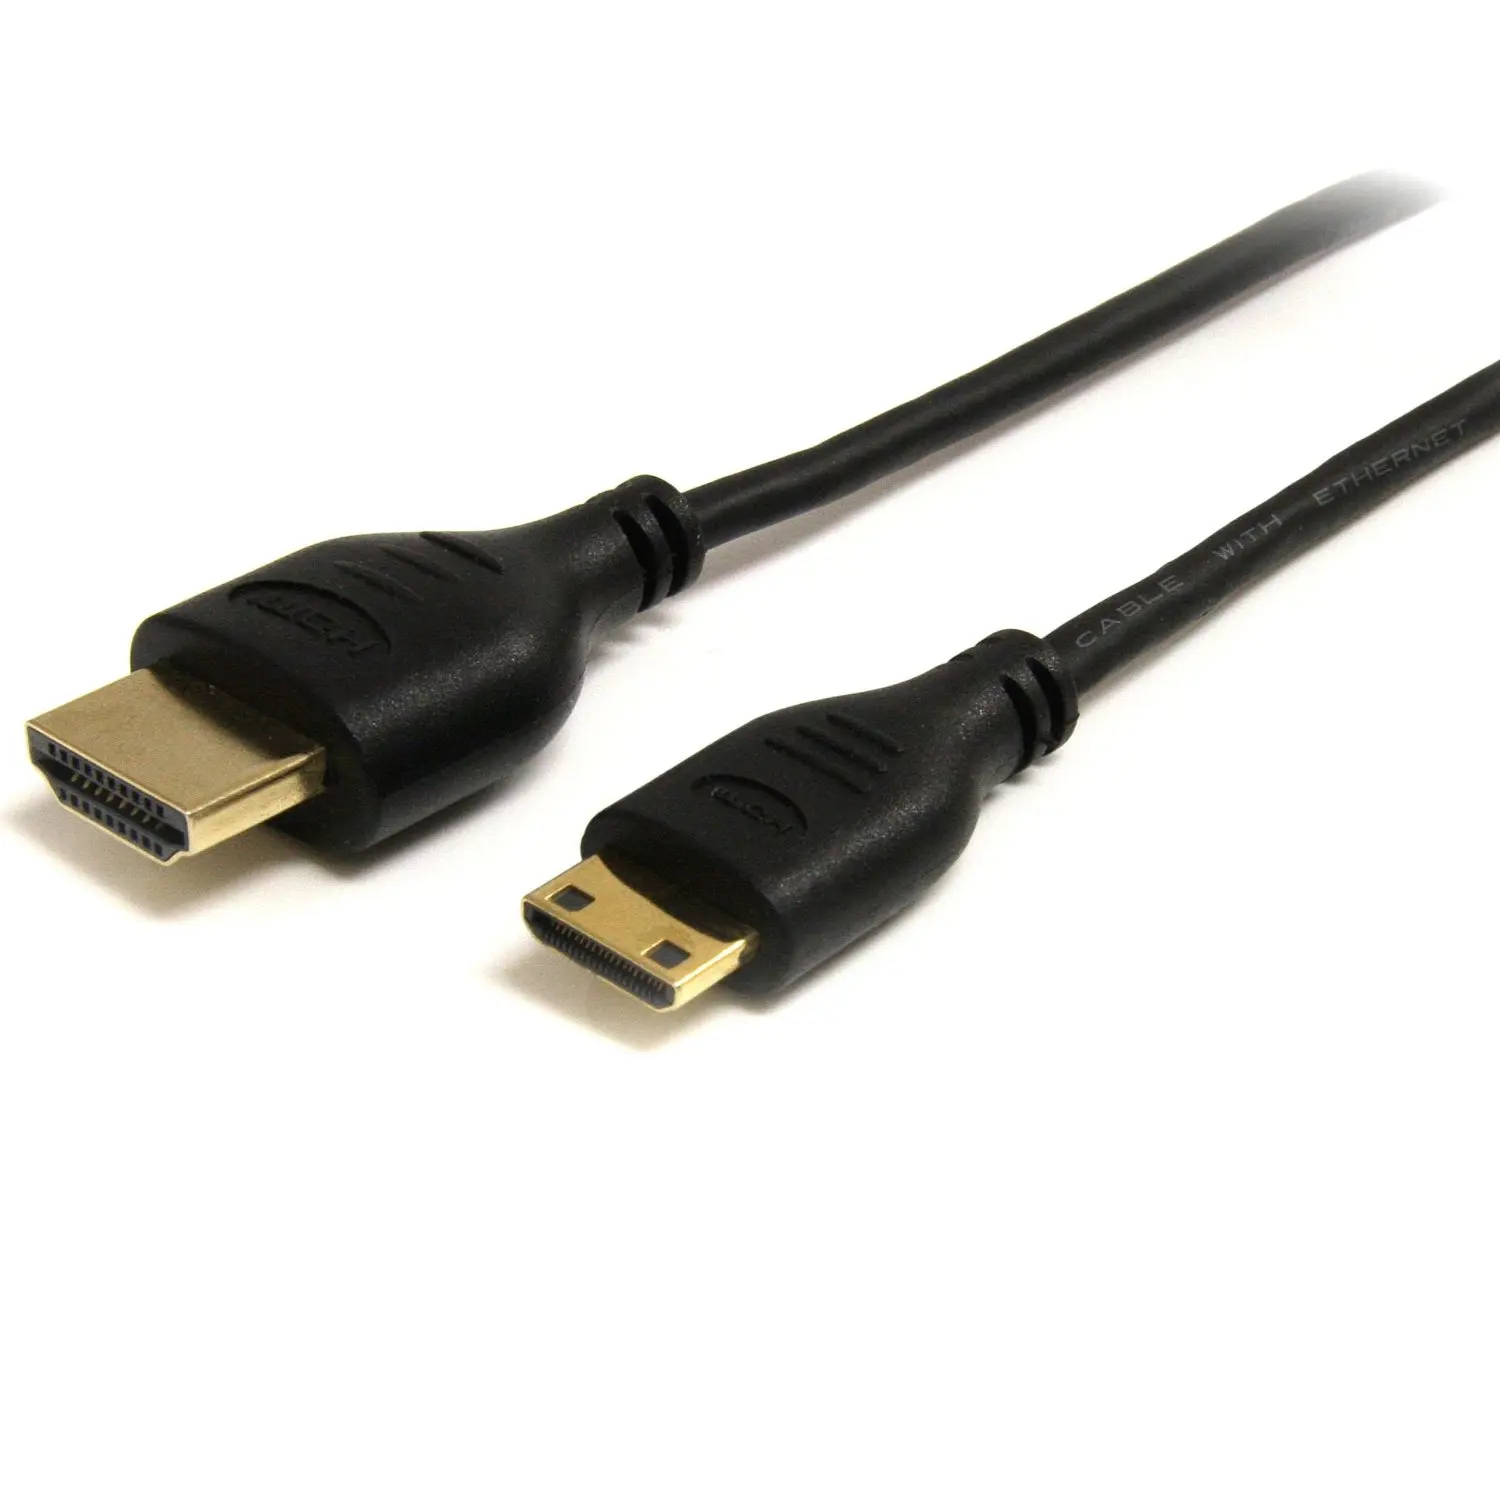 Hdmi support. Кабель HDMI-MINIHDMI 1м. Кабель Sony HDMI-HDMI (2 метра) — фиолетовый. HDMI 1.5.